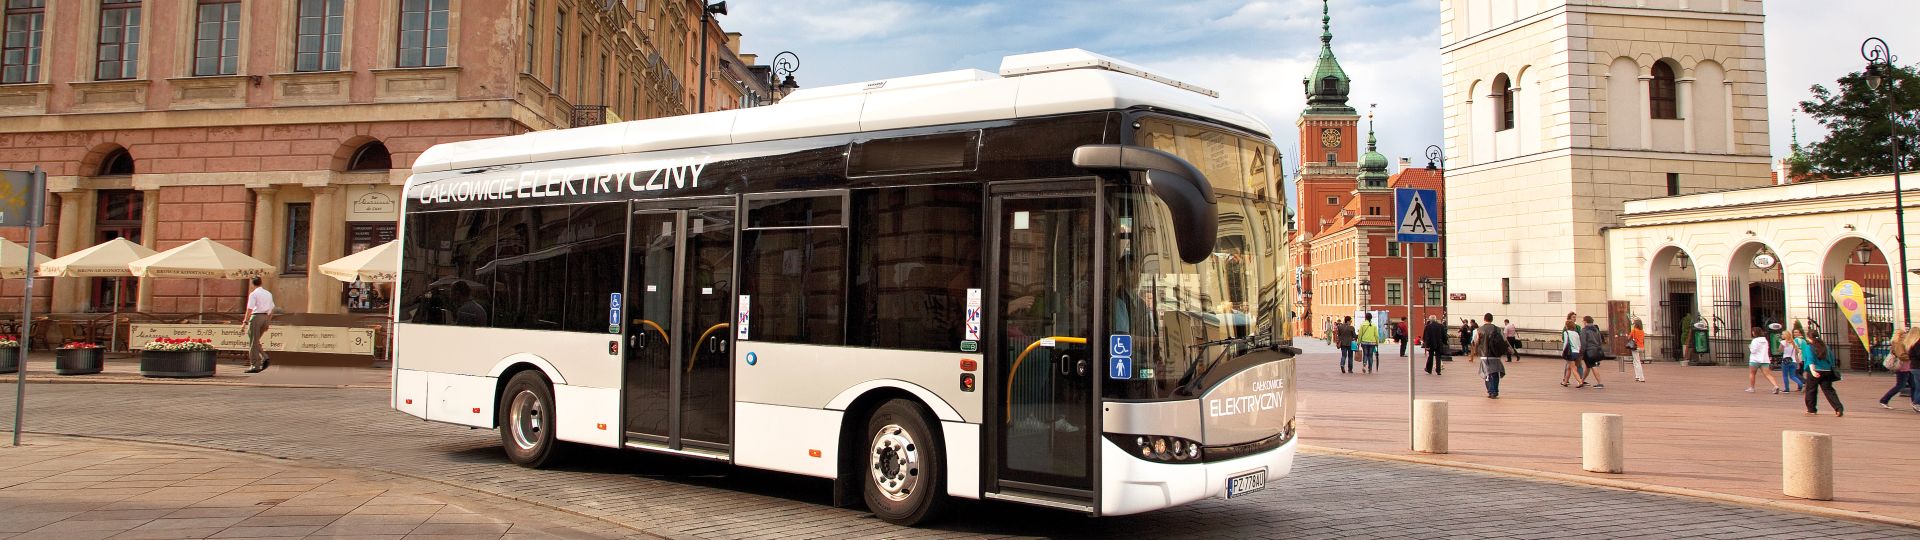 Stalowa Wola buys Solaris electric buses